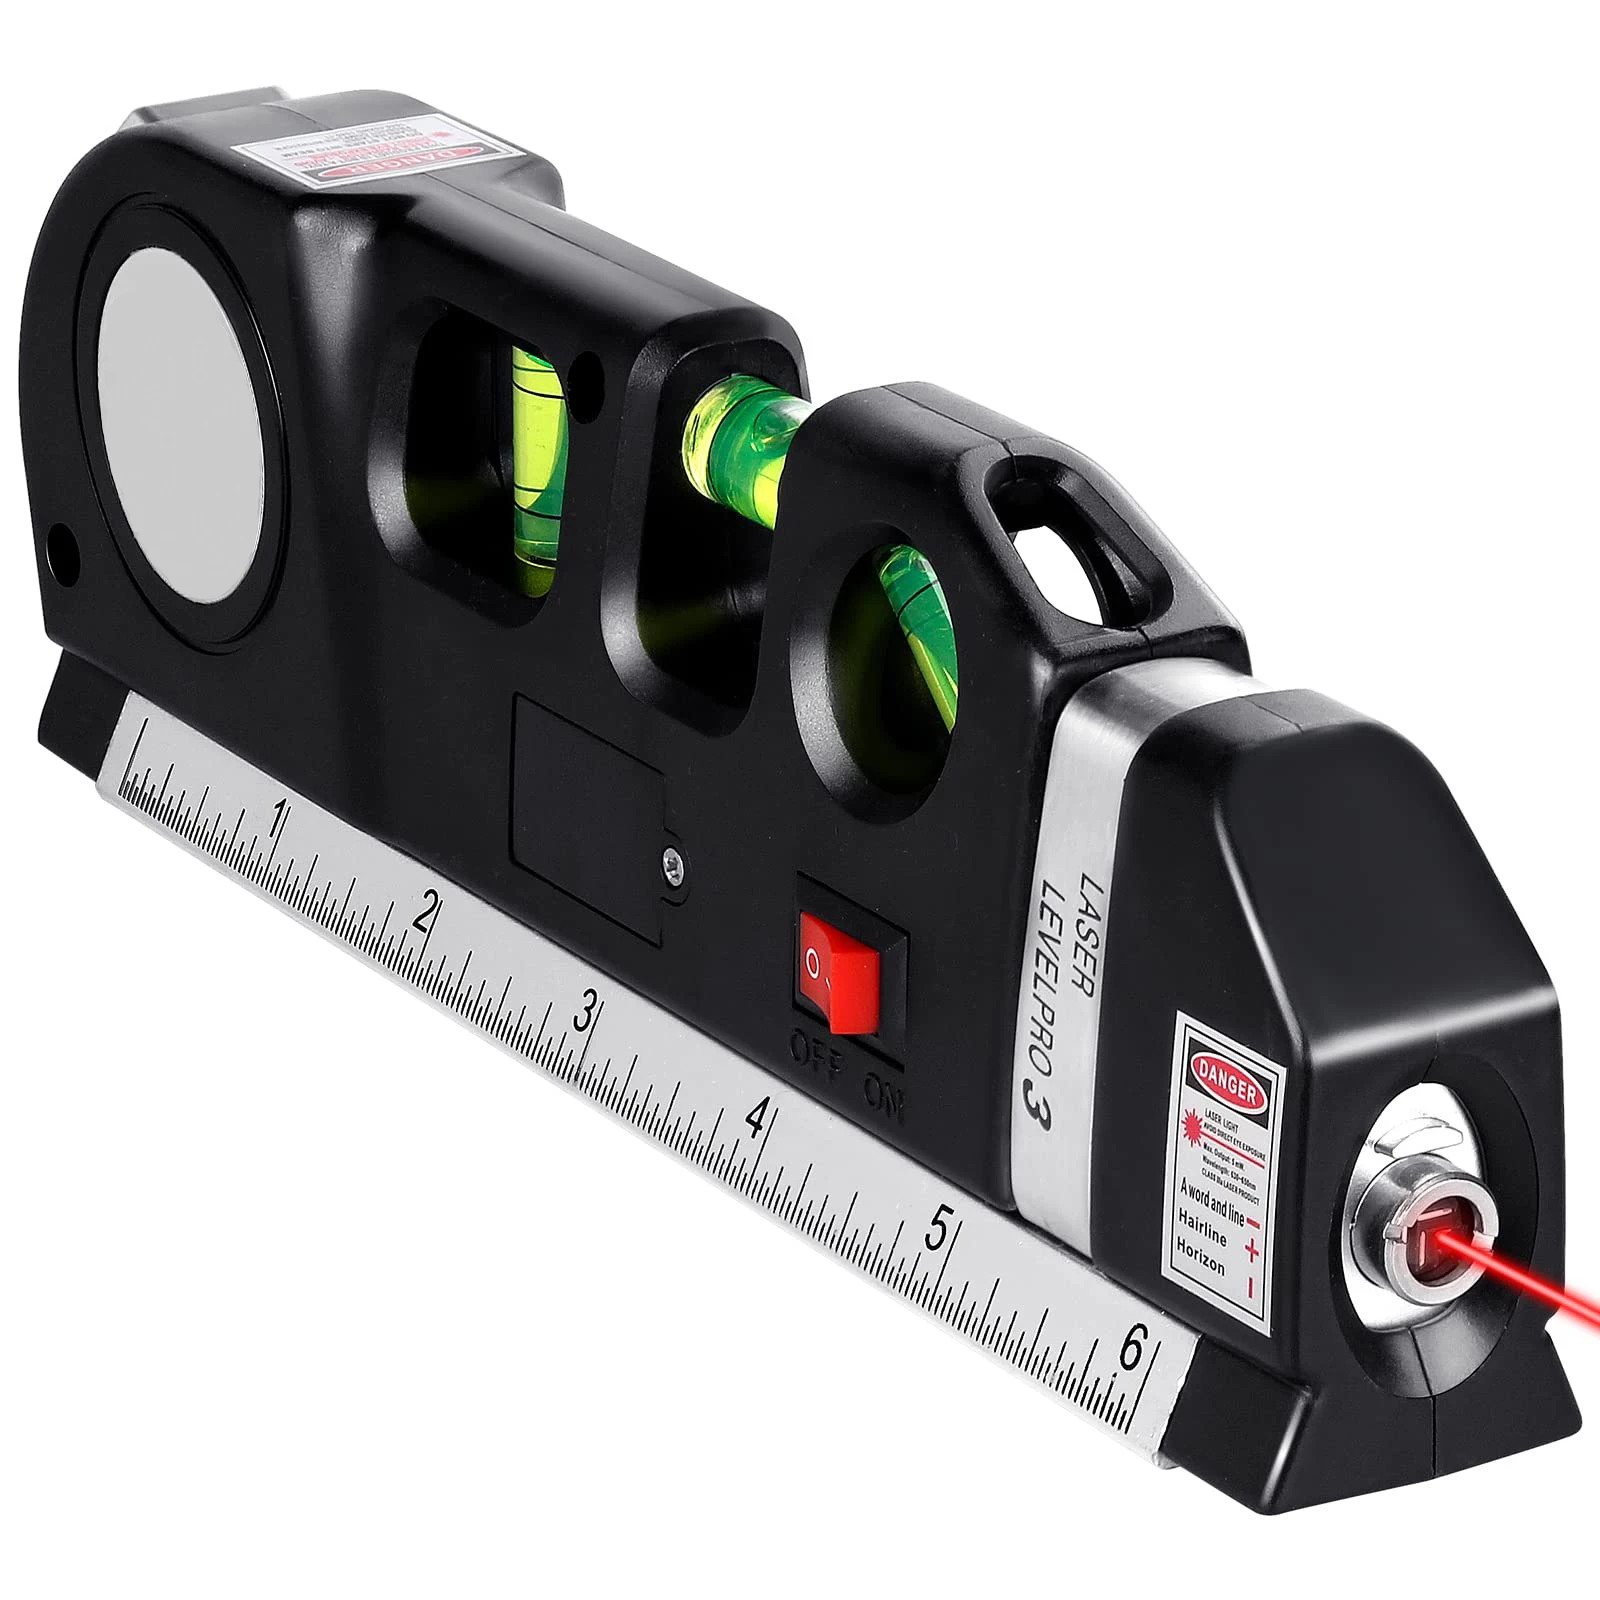 

Ruler Laser Multi-function Line Straight Aligner High Measure Vertical Precise Tape Instrument Laser Leveling Level Steel